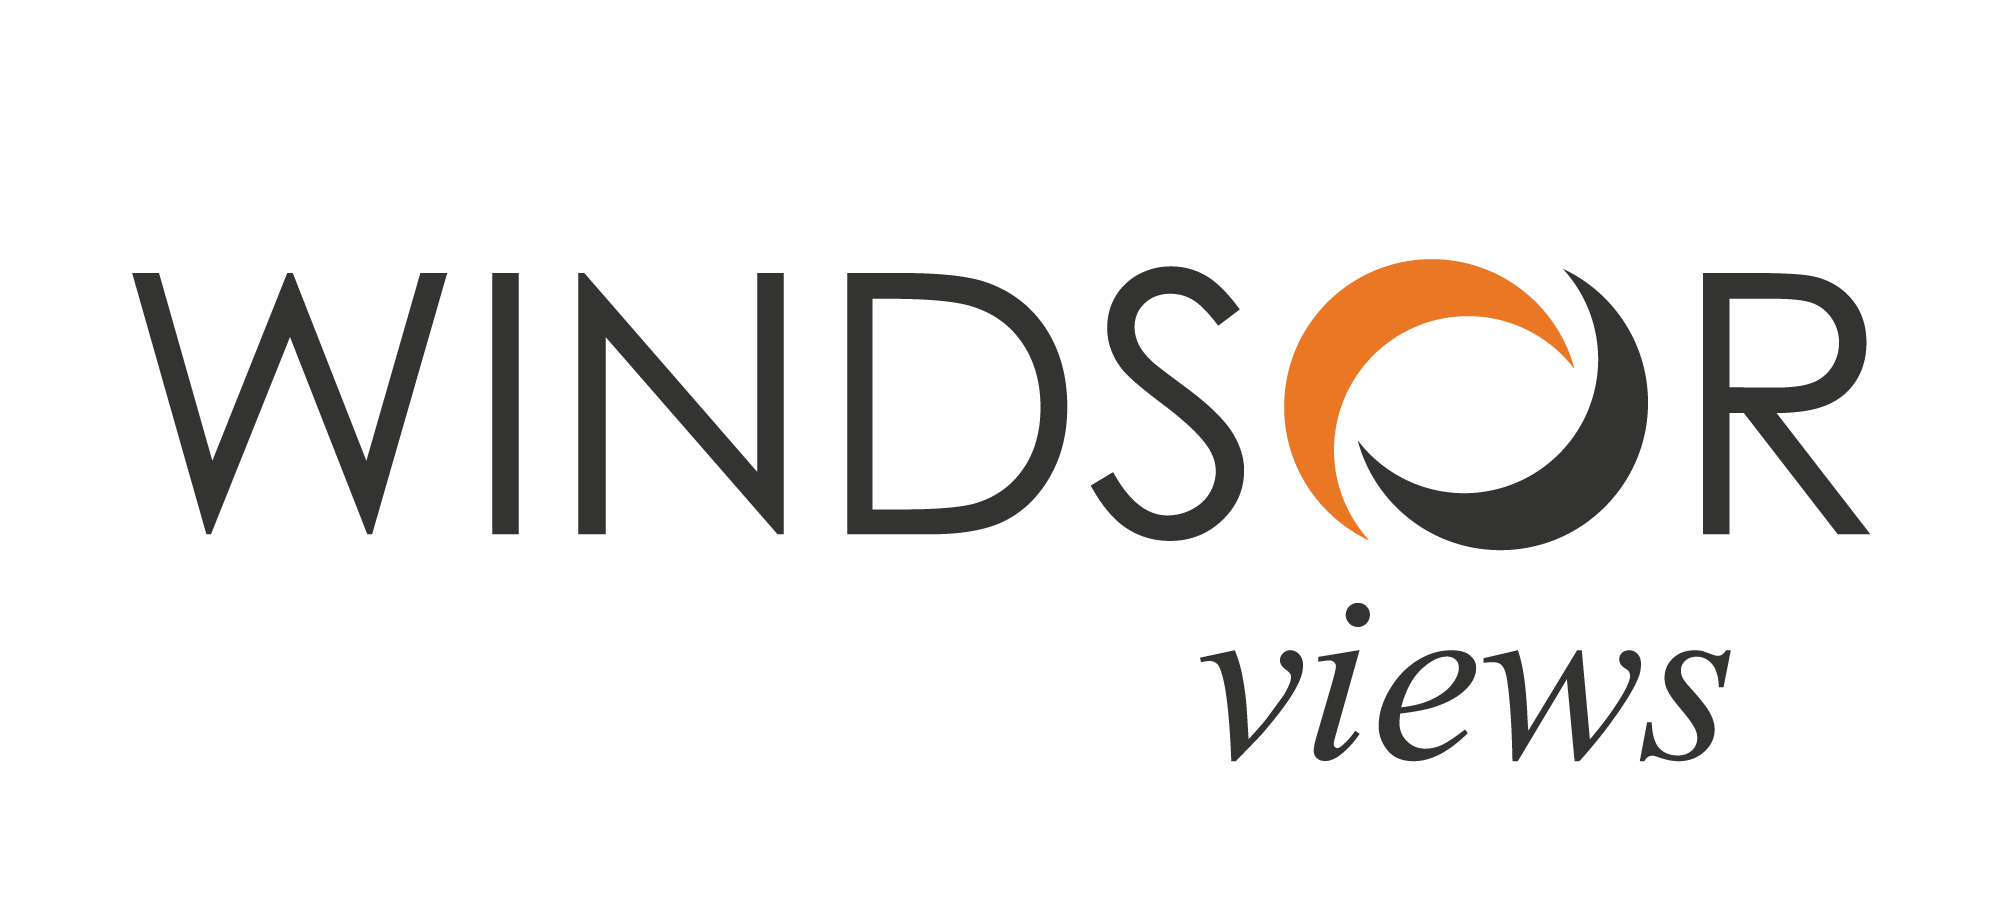 Windsor-Views-Logo.png